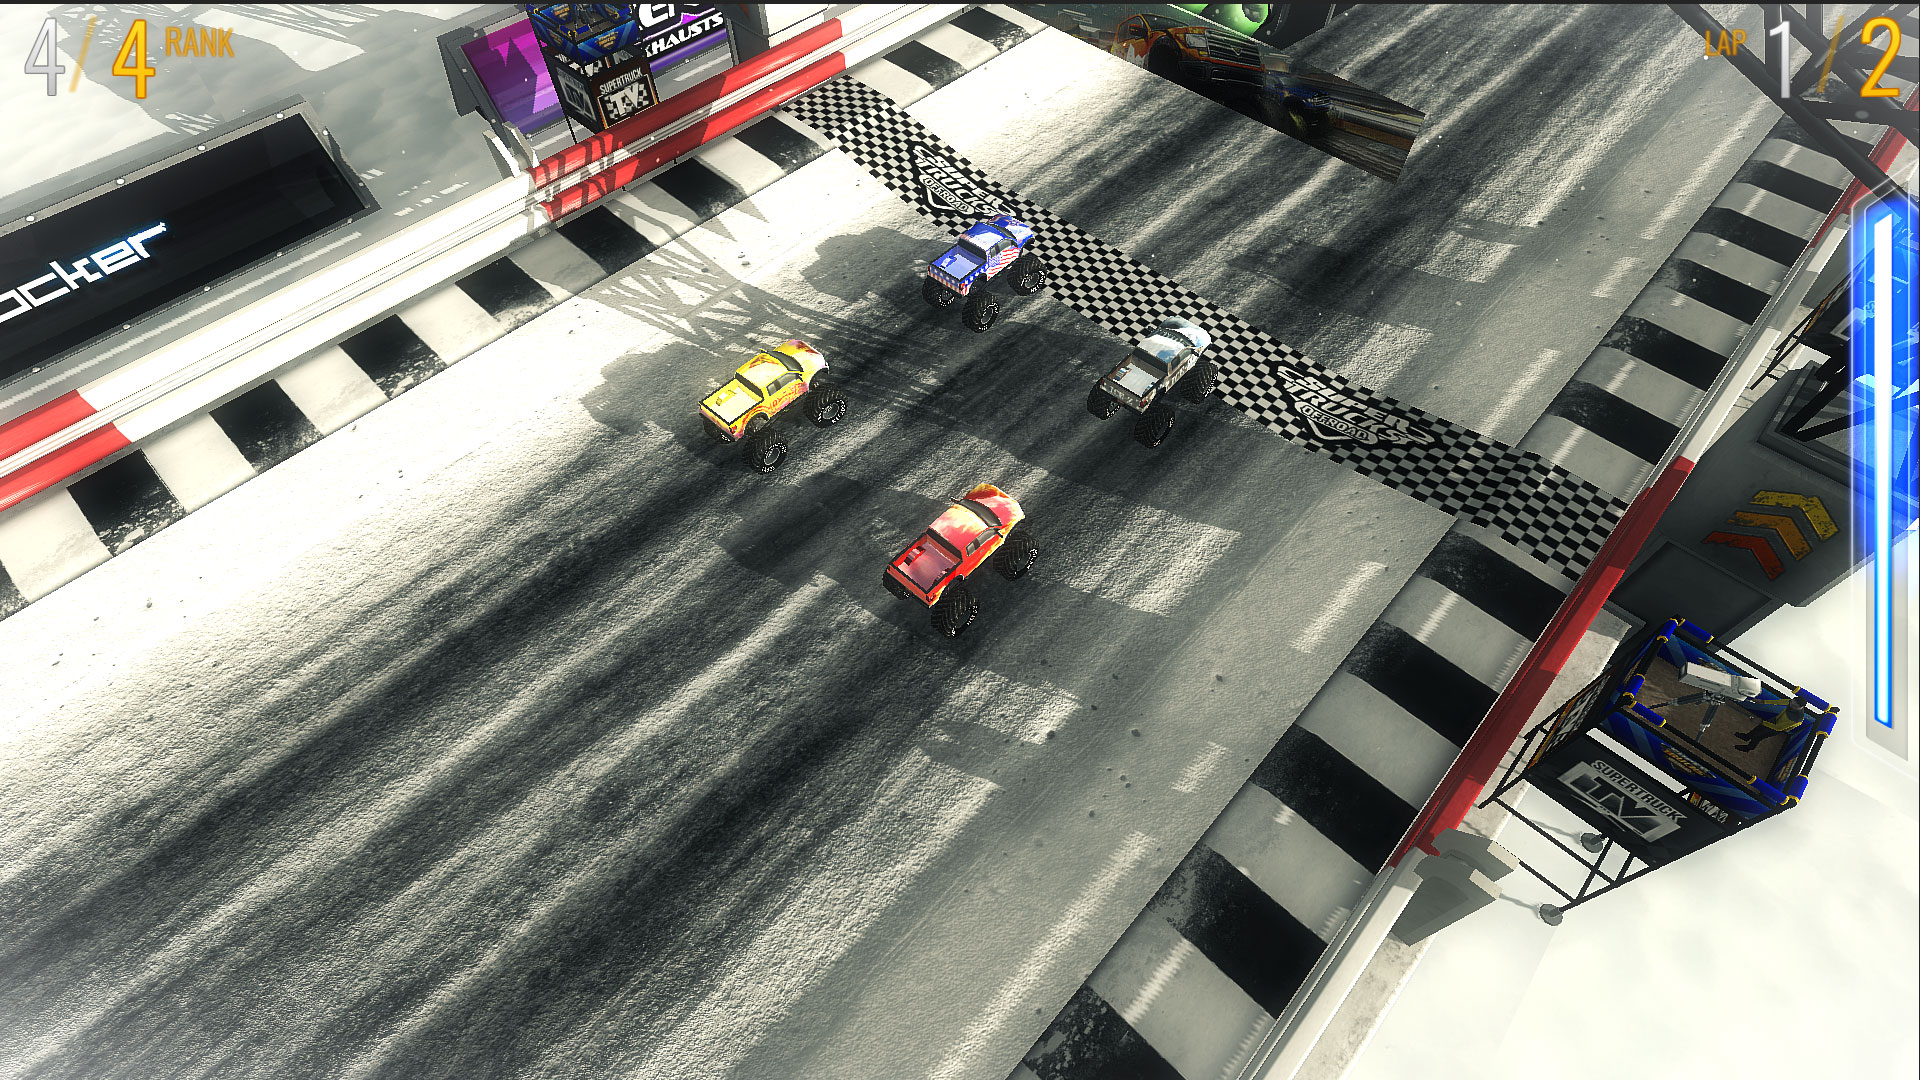 SuperTrucks Offroad Racing - Android game screenshots.